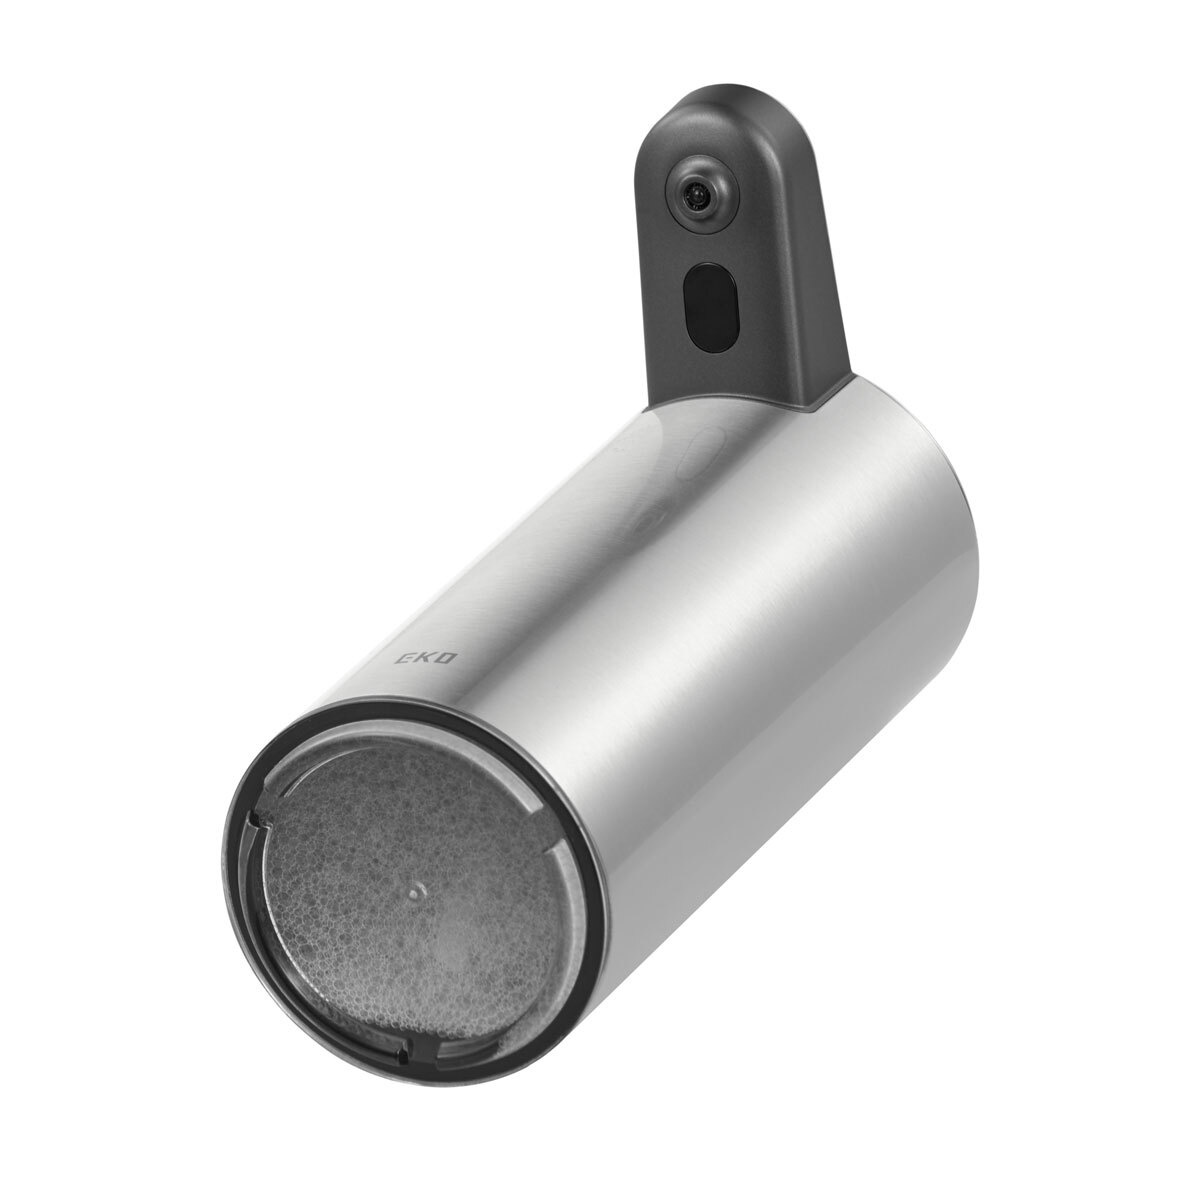 EKO Aroma Motion Sensor Soap Pump in Stainless Steel